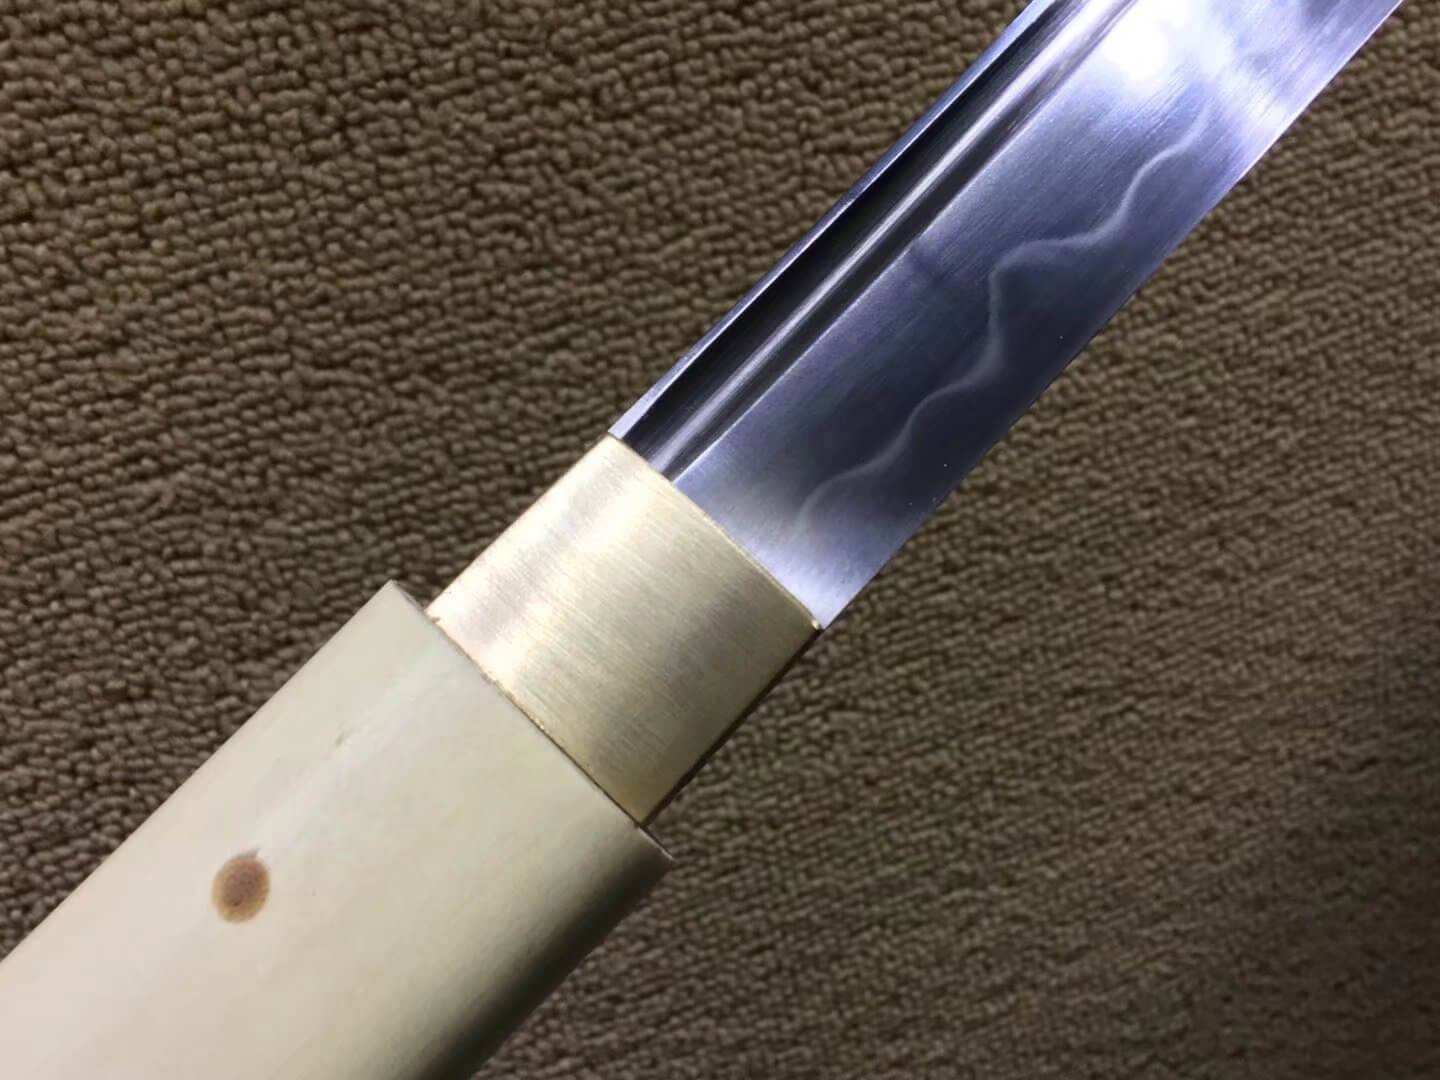 Katana,High carbon steel burn blade,Beech wood scabbard,Length 39" - Chinese sword shop